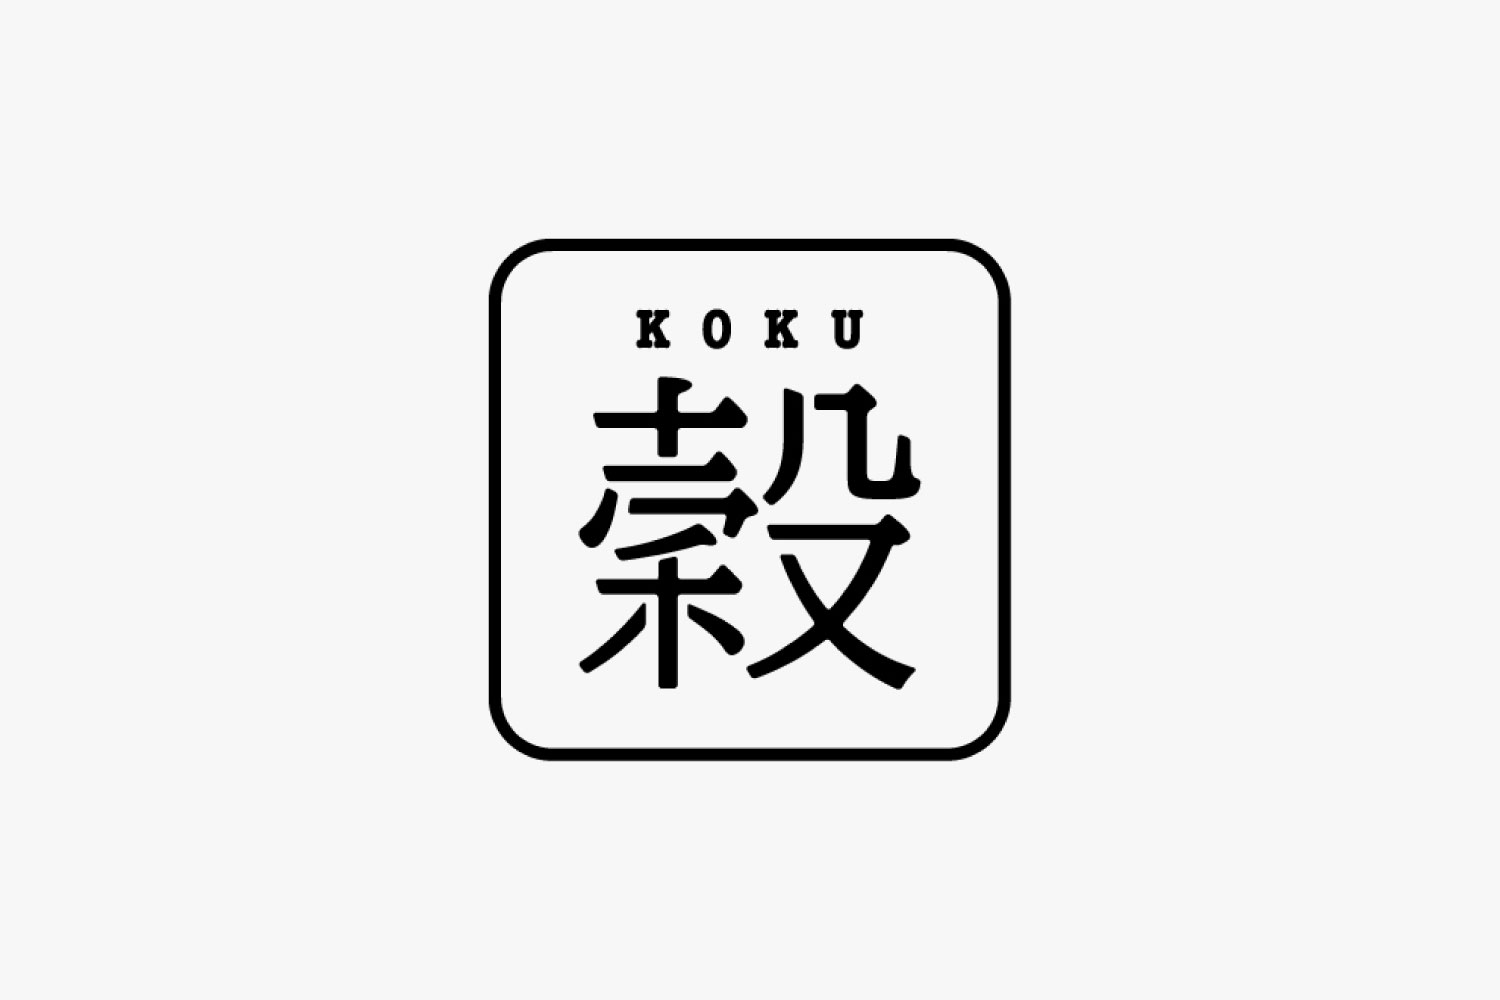 KOKU Logomark